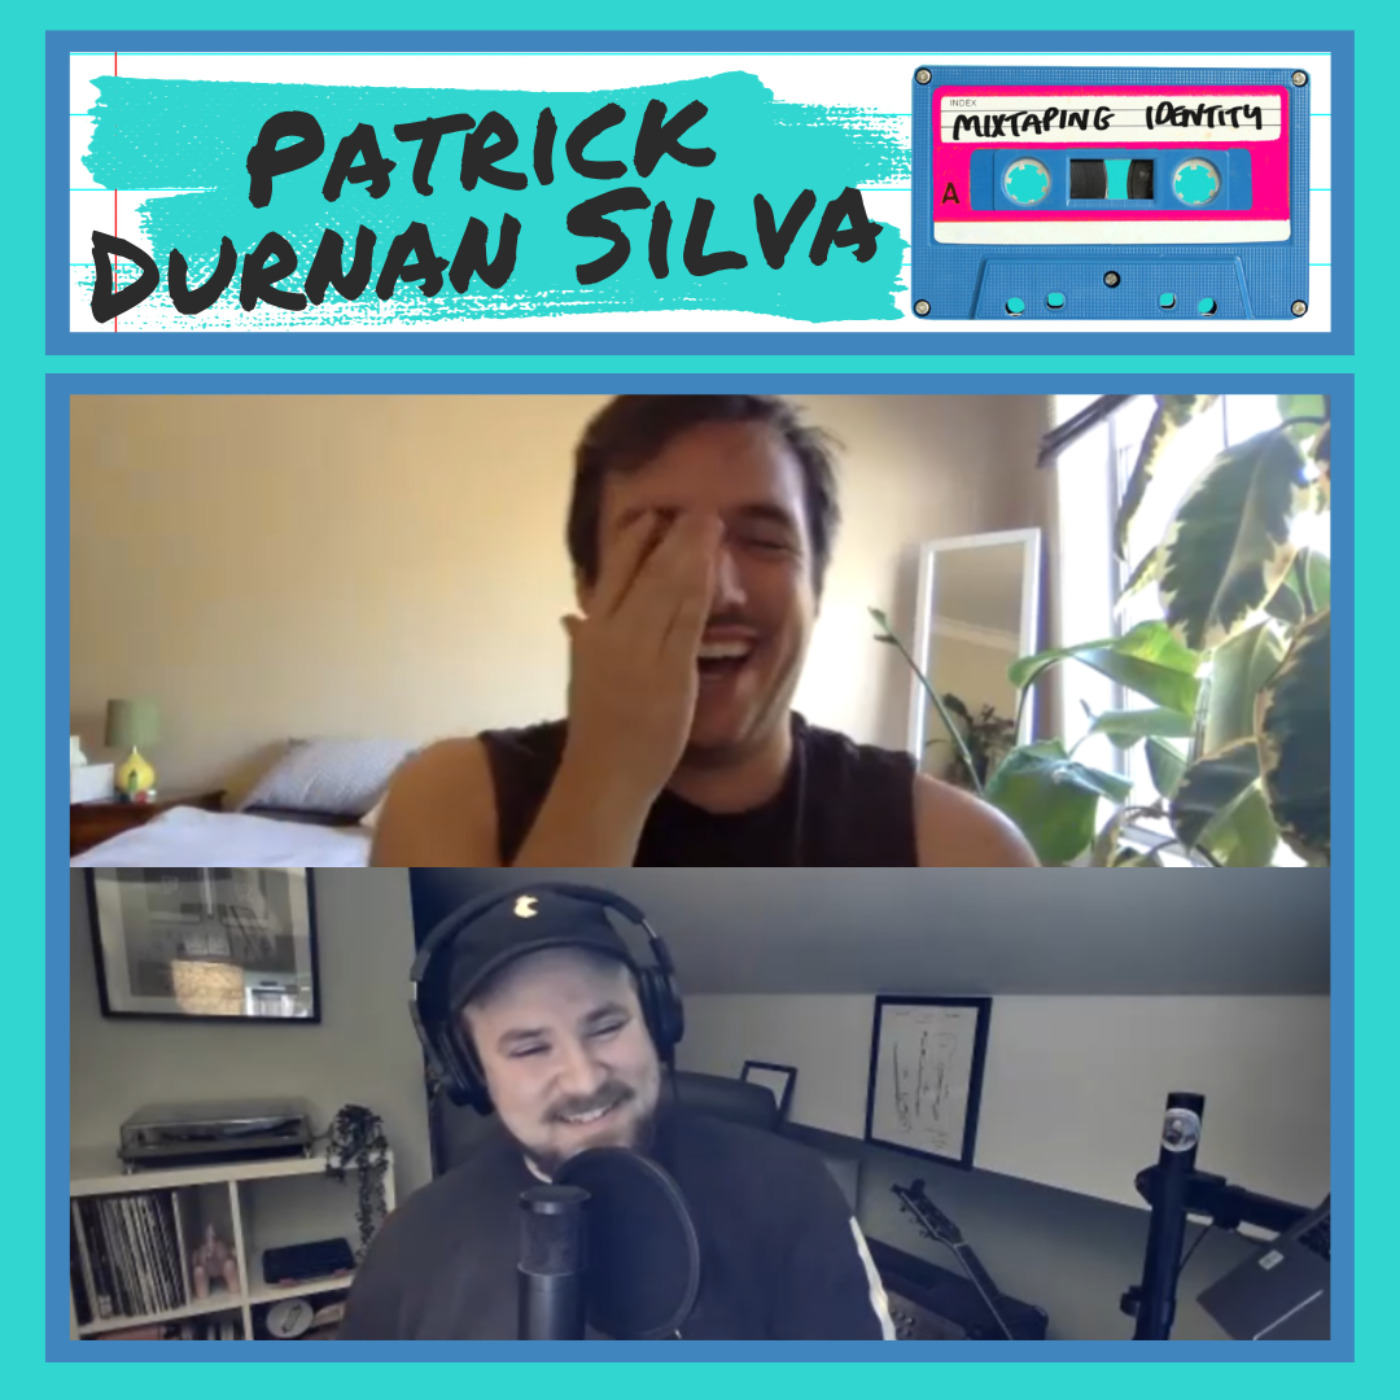 Episode 080 - Patrick Durnan Silva